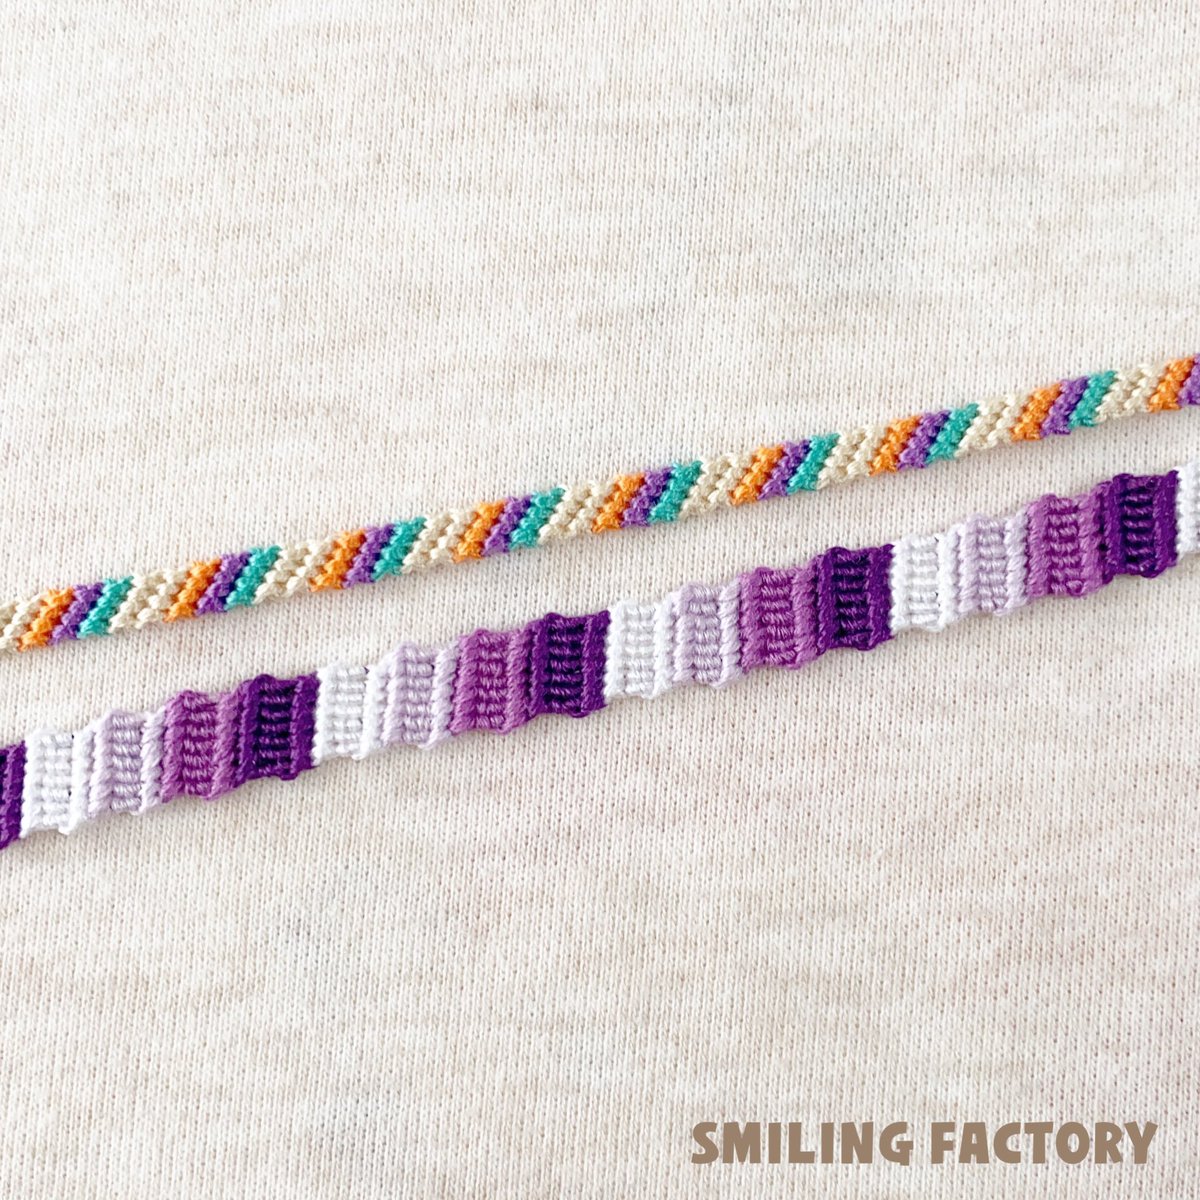 Yaaya Smilingfactory 斜め模様 紫グラデーション を組み合わせると 今度は エキゾチック な雰囲気になります ミサンガ Friendshipbracelet ハンドメイド Handmade プロミスリング 斜め模様 ストライプ エスニック アジアン風 組み合わせ